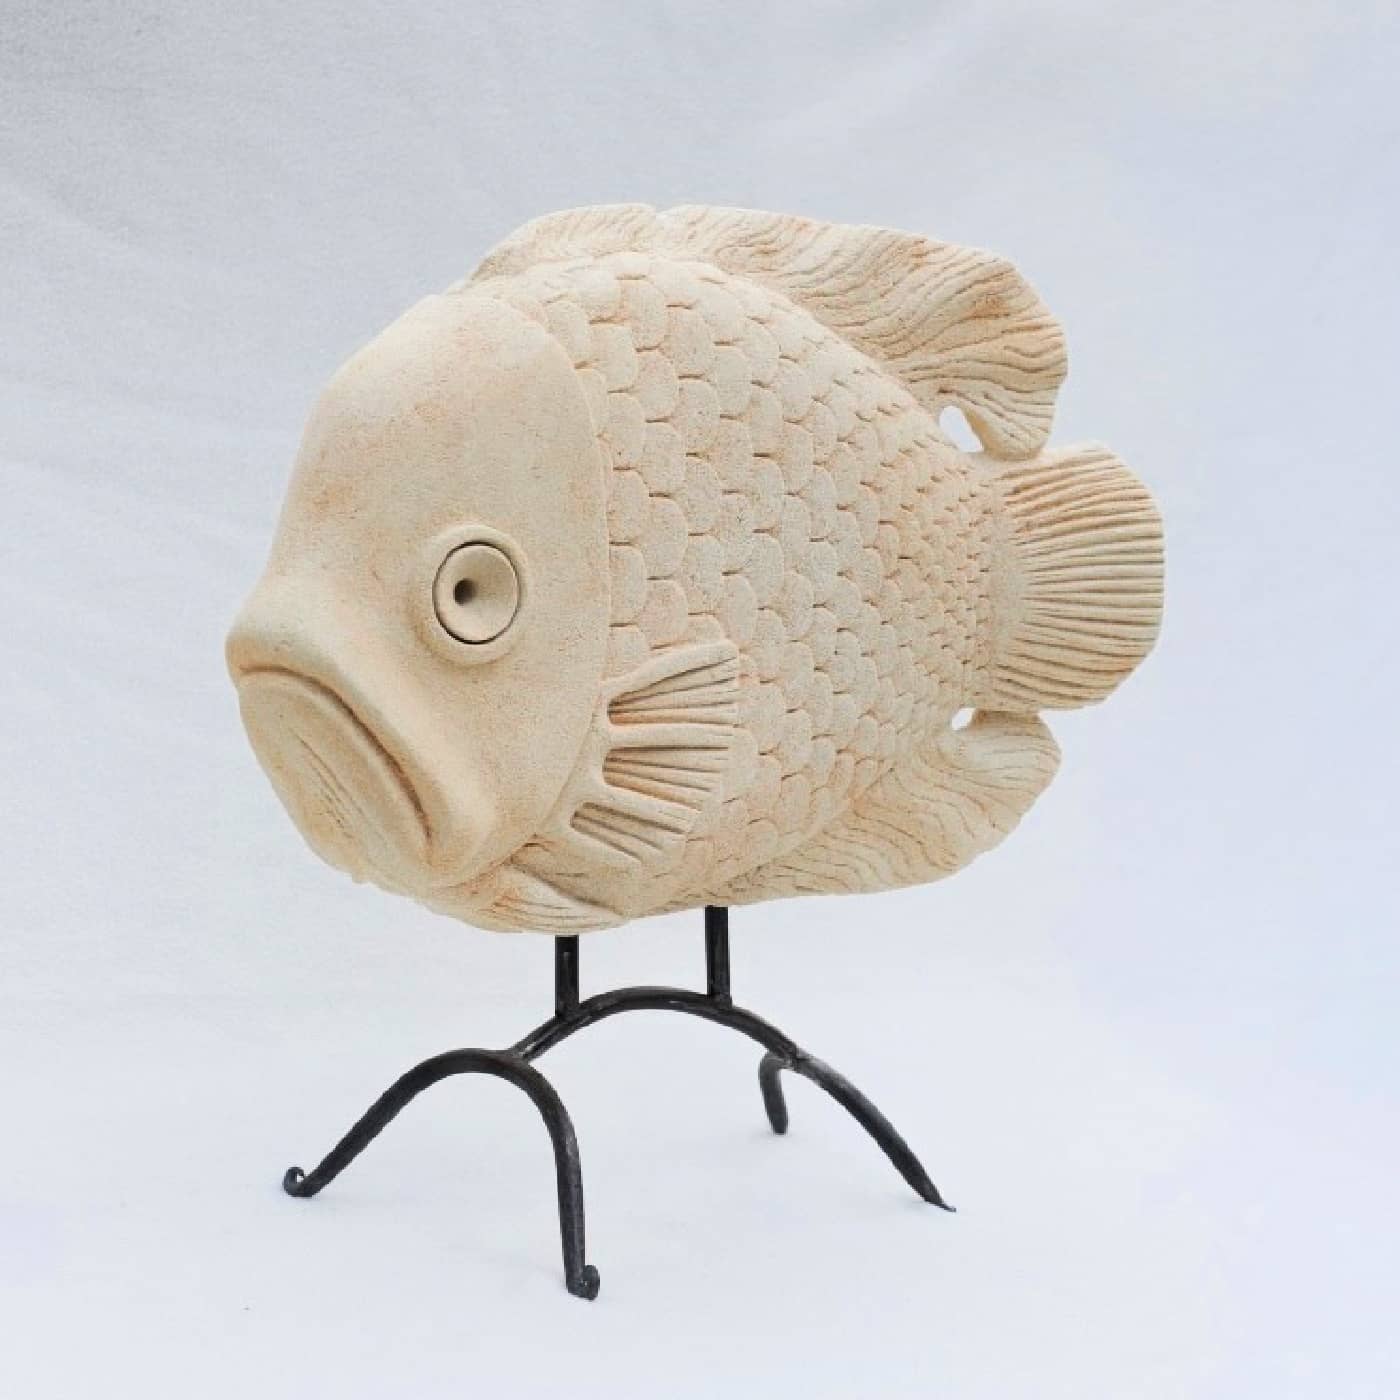 Peninsula Based Australian Artist Luke Connelly Sculpture ~ 'Fish 20' - Curate Art & Design Gallery Sorrento Mornington Peninsula Melbourne